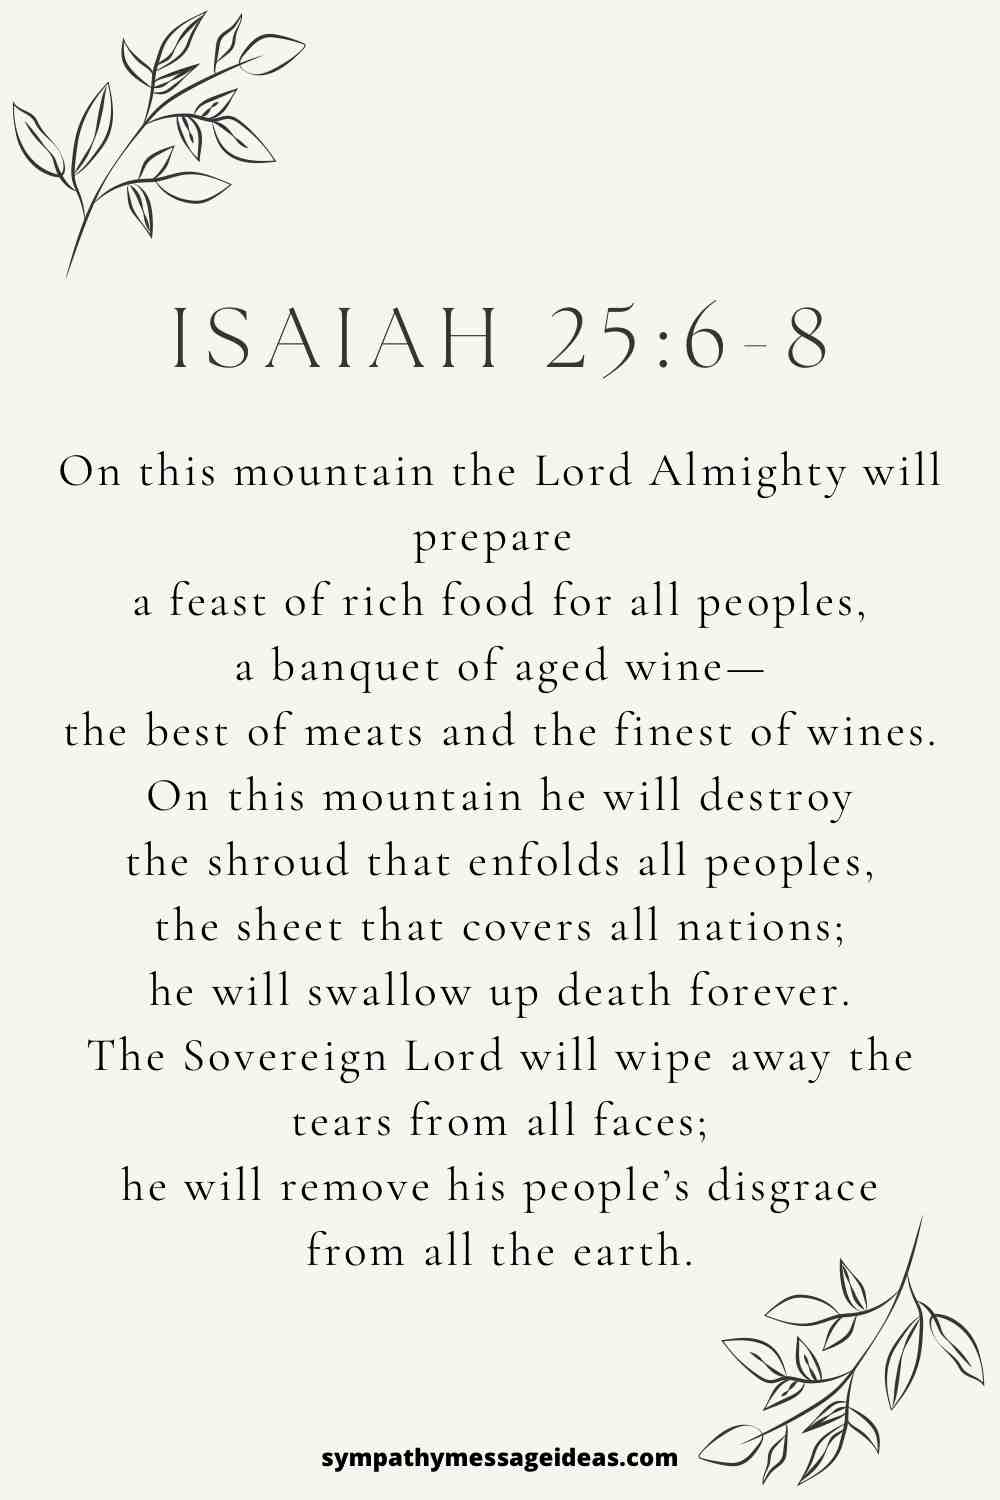 isaiah 25:6-8 catholic funeral reading